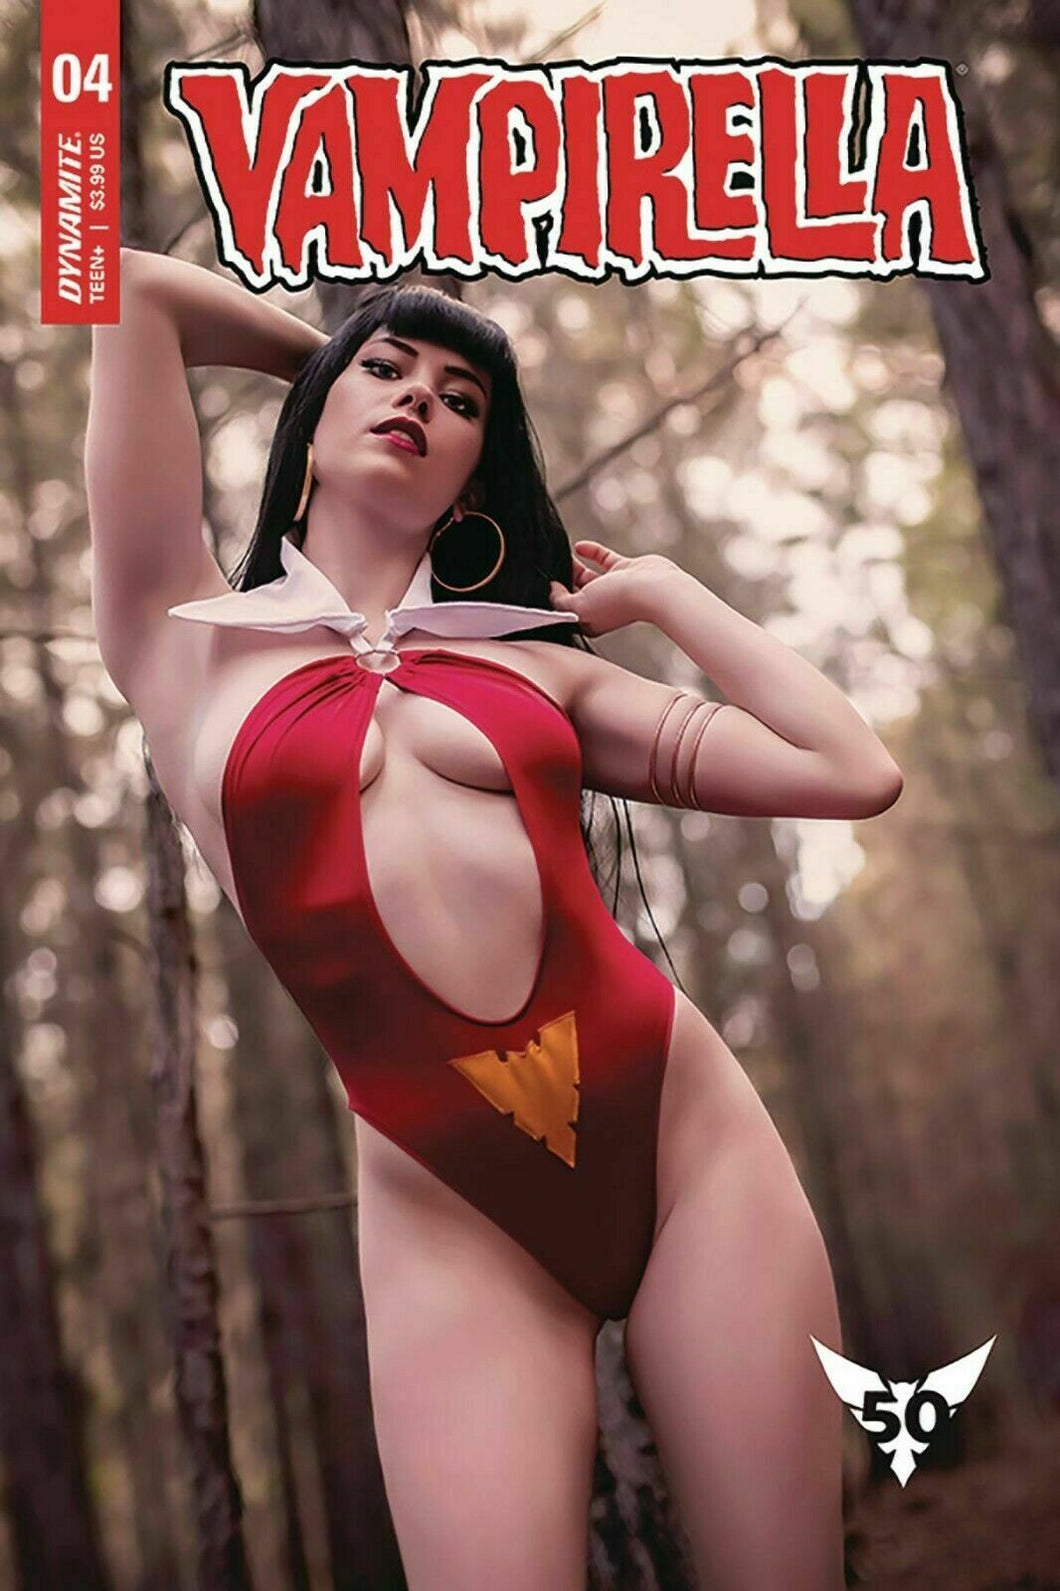 Vampirella # 4 Nichameleon Cosplay Photo Variant Cover 